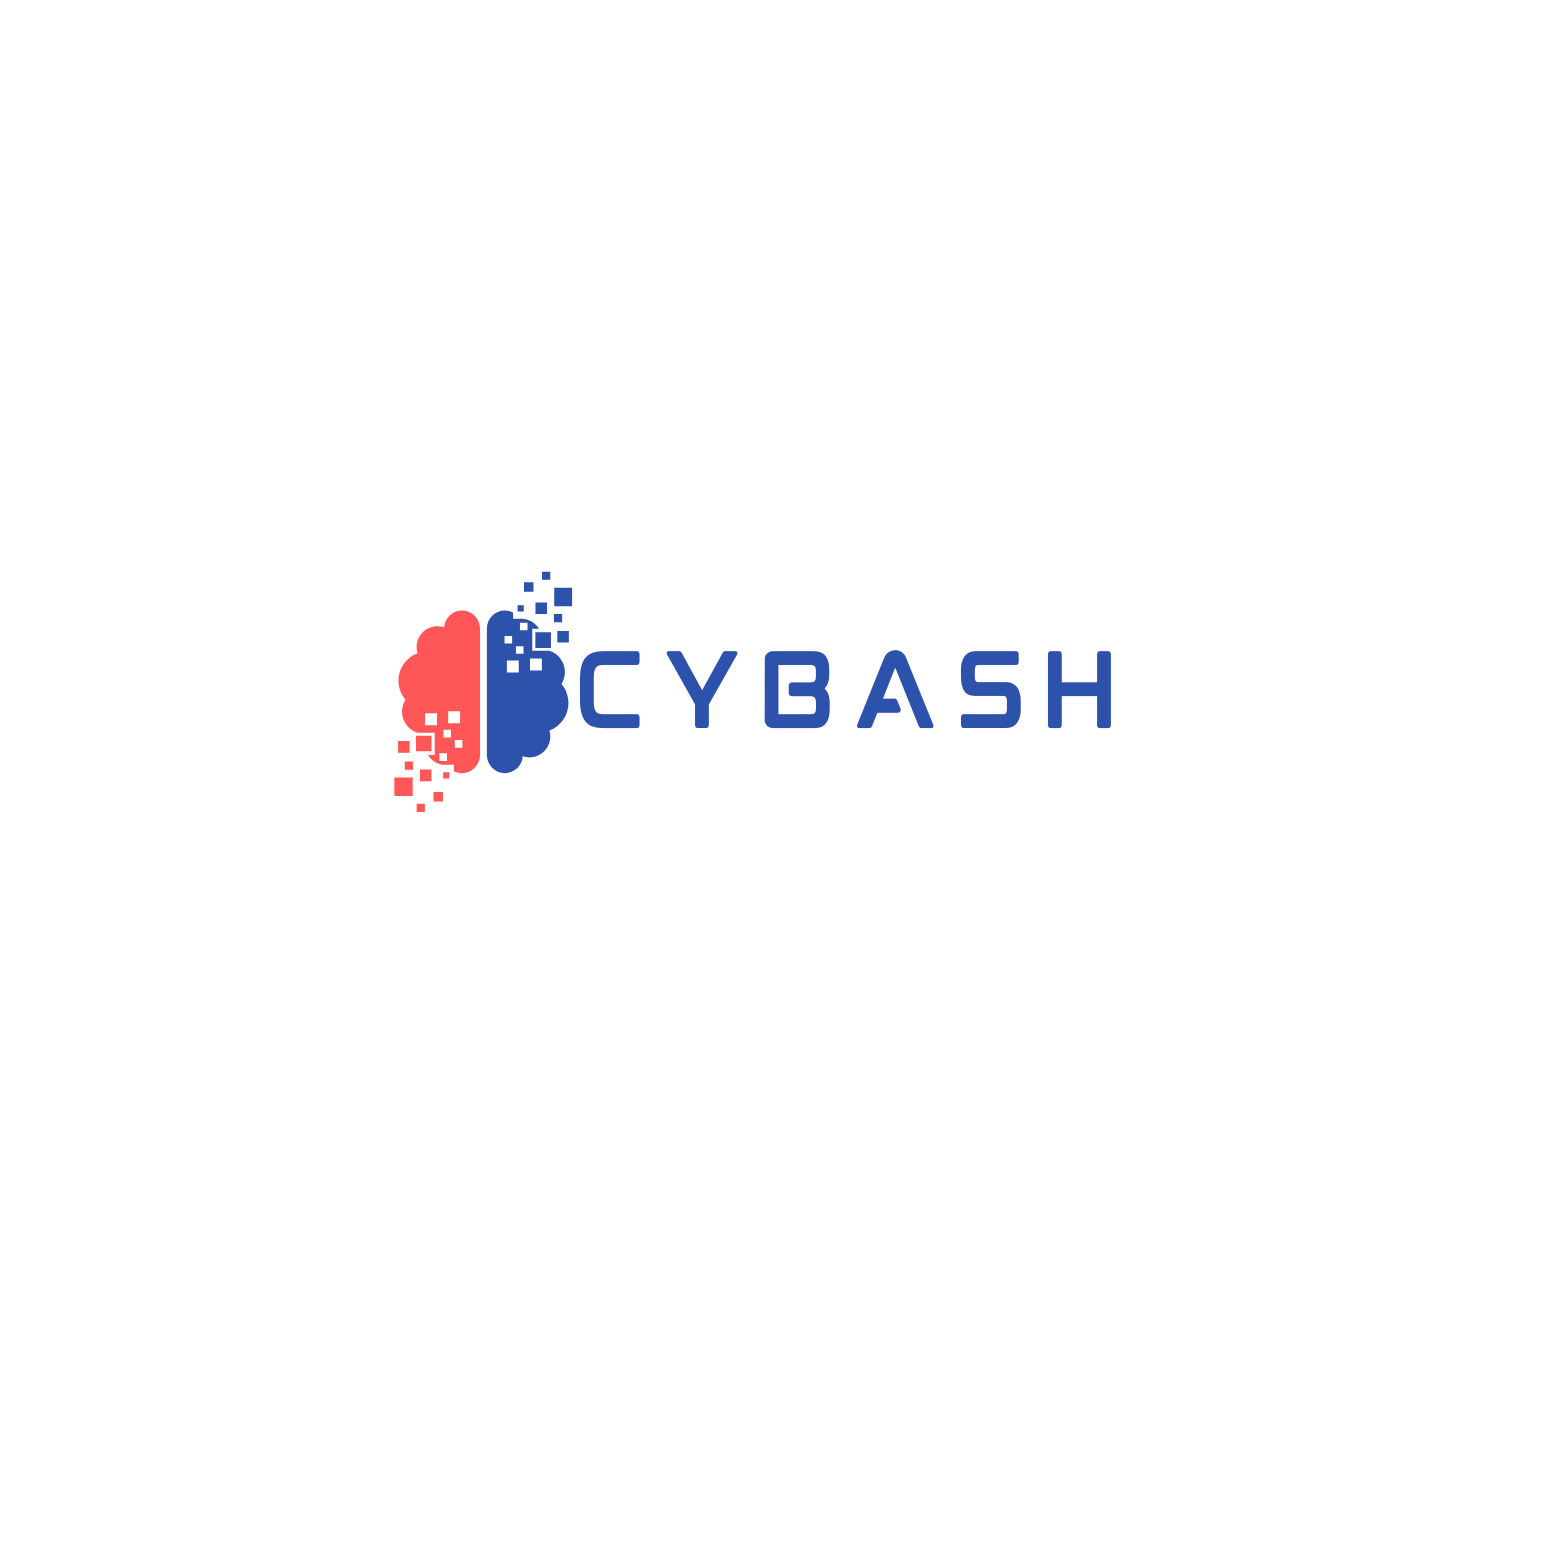 Cybash_log-tp-1500px